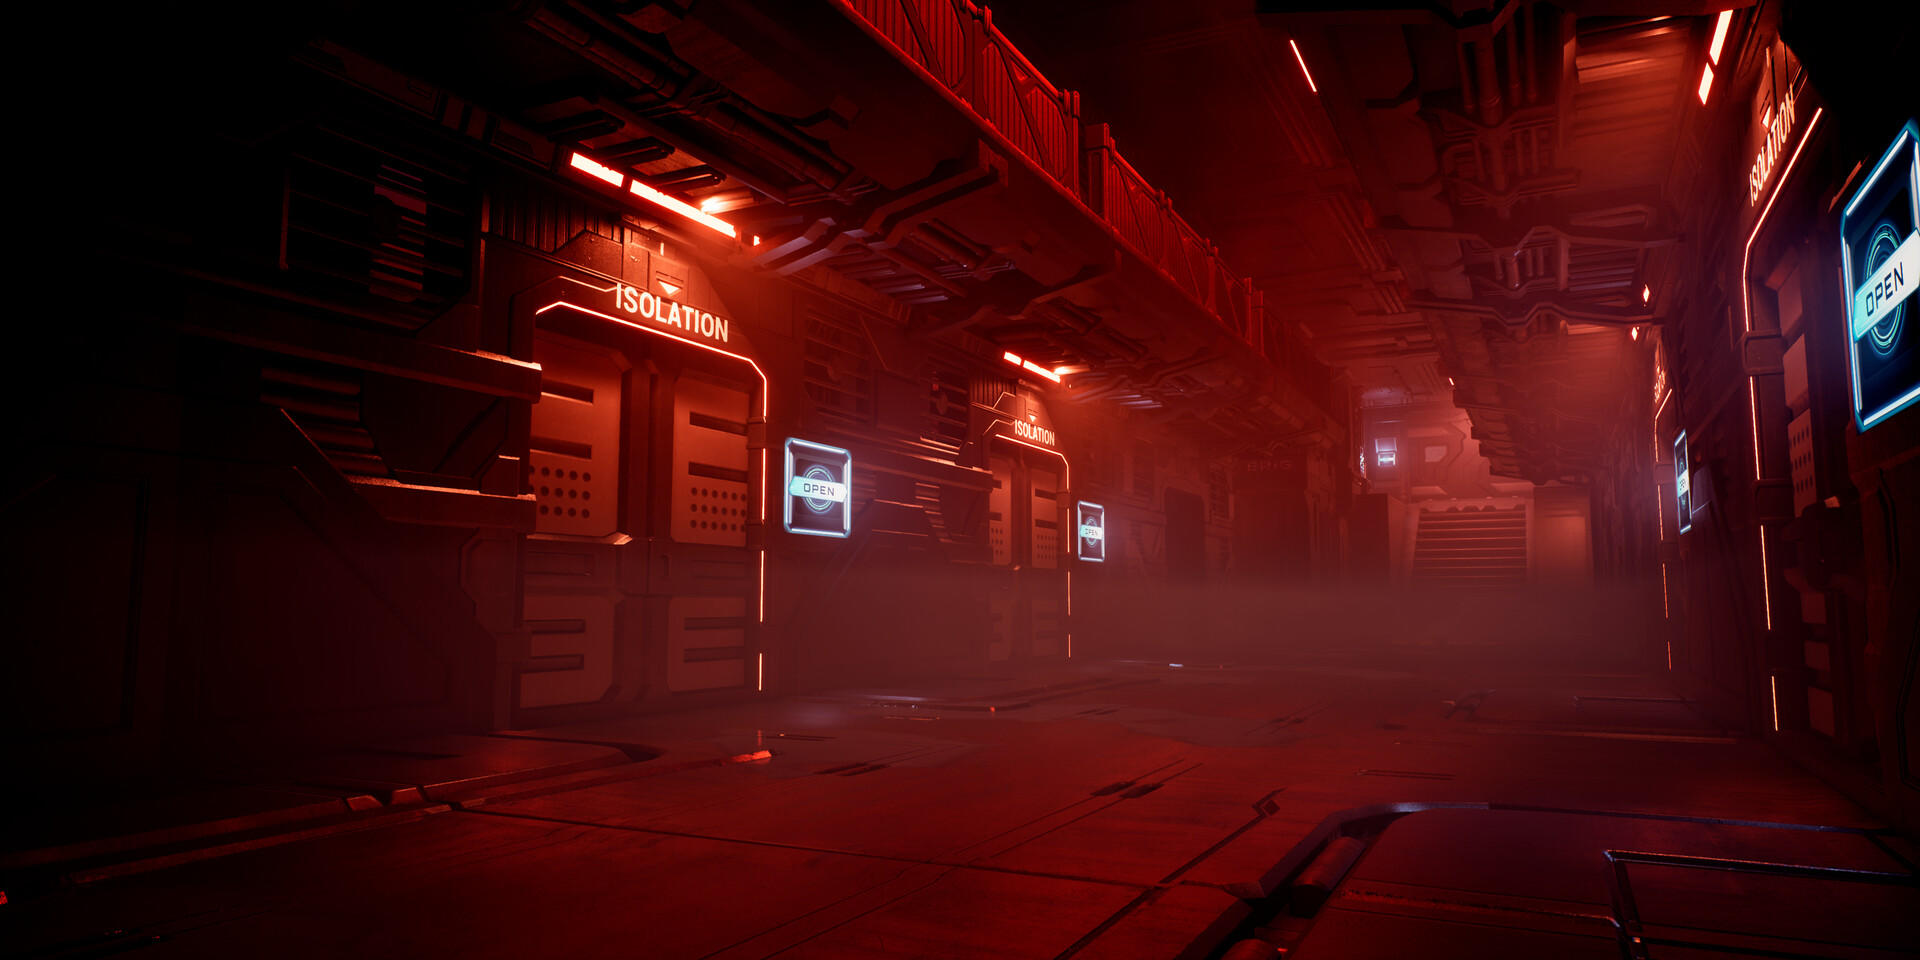 Starsiege: Deadzone screenshot game